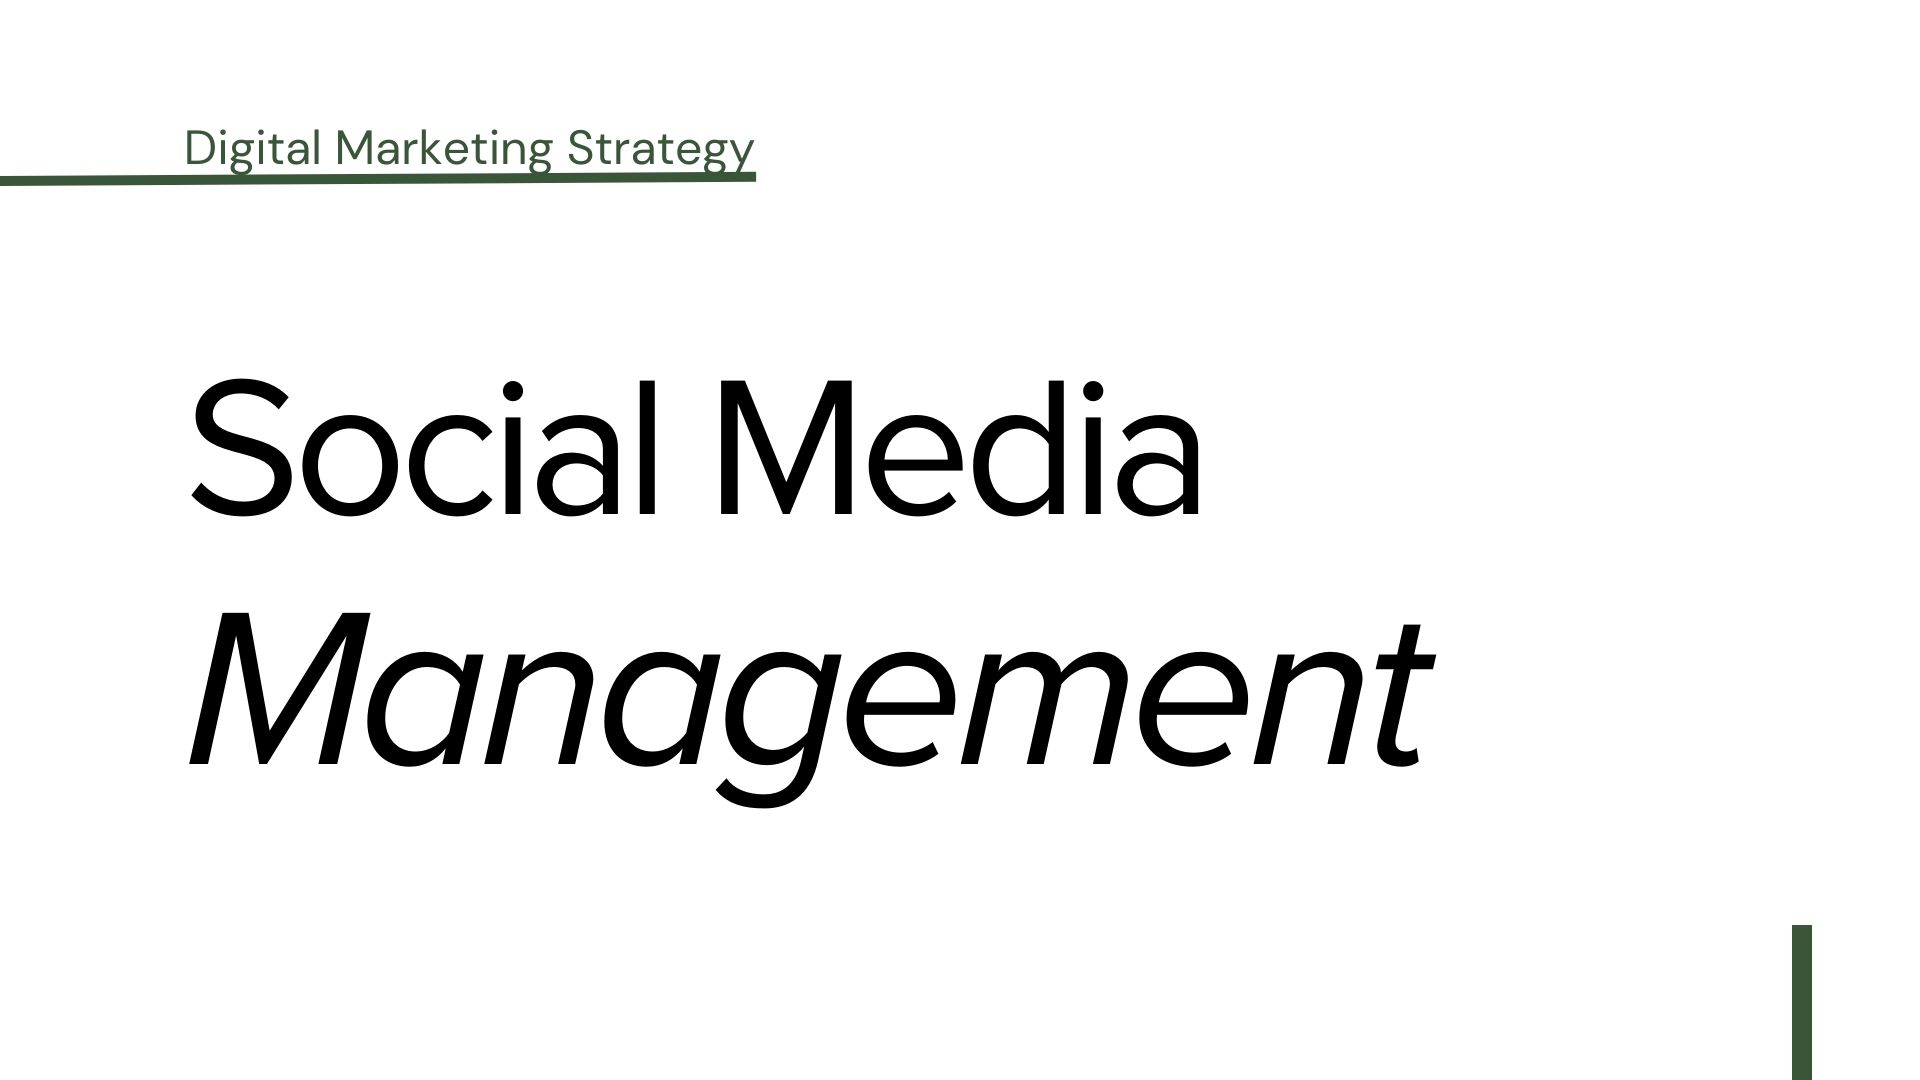 Digital Marketing Strategy: Social Media Management